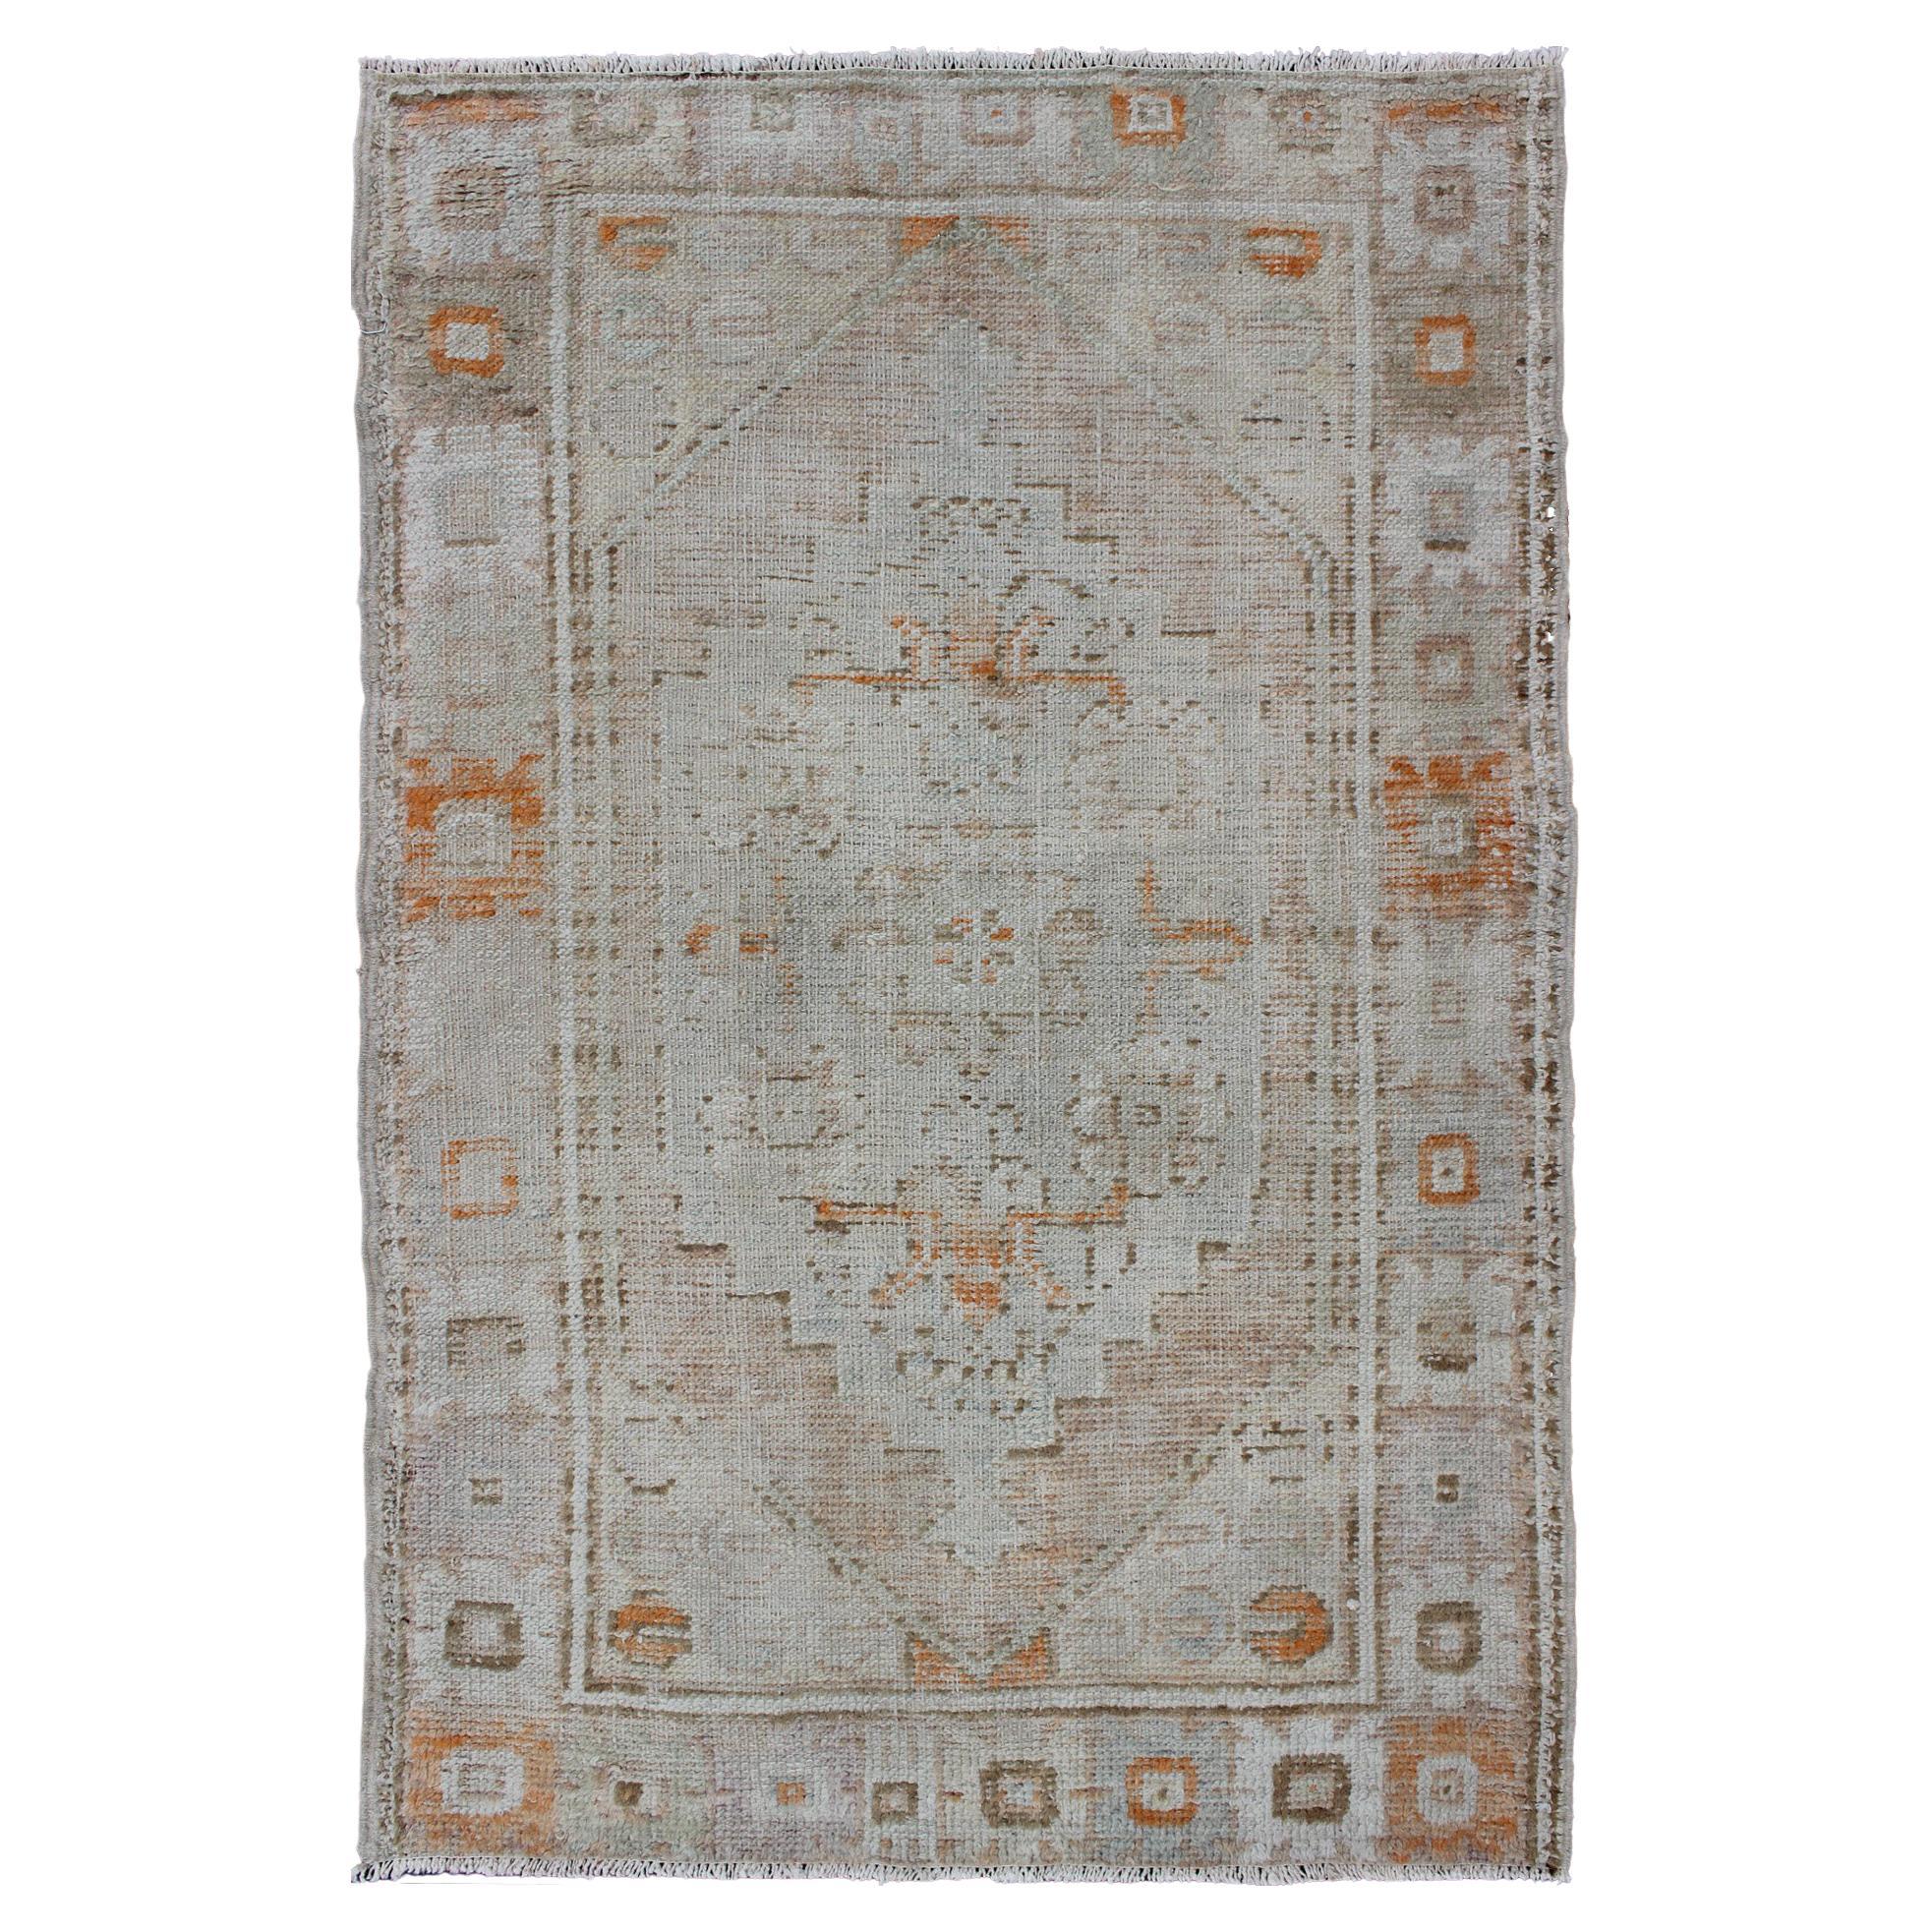 Vintage Turkish Oushak Carpet with Beautiful Floral Motifs in Tan, Camel, Orange For Sale